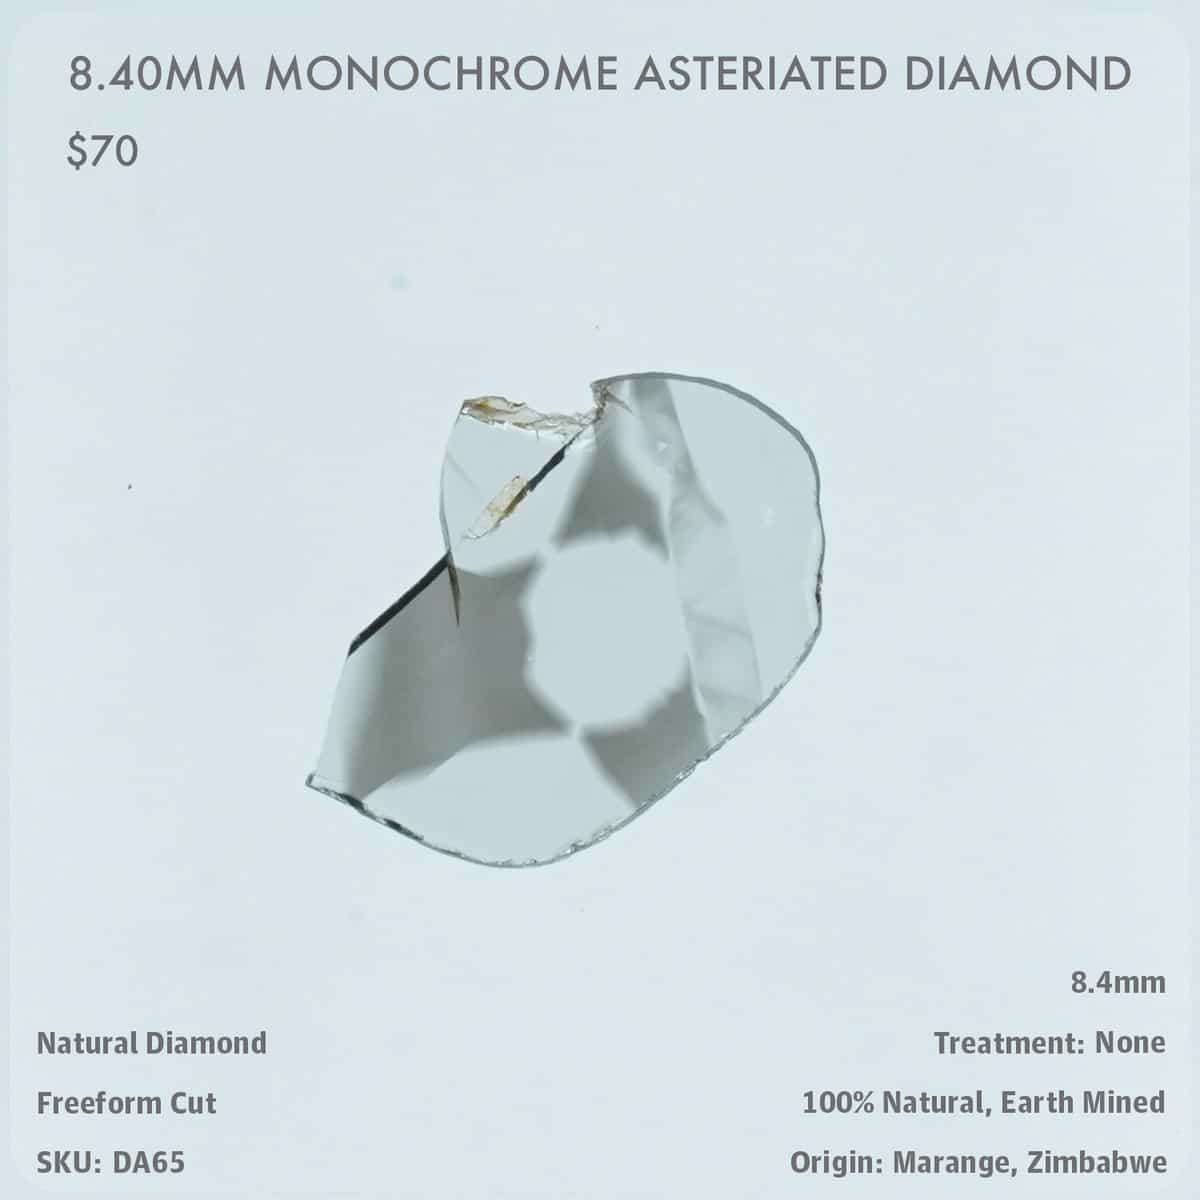 8.40mm Monochrome Asteriated Diamond